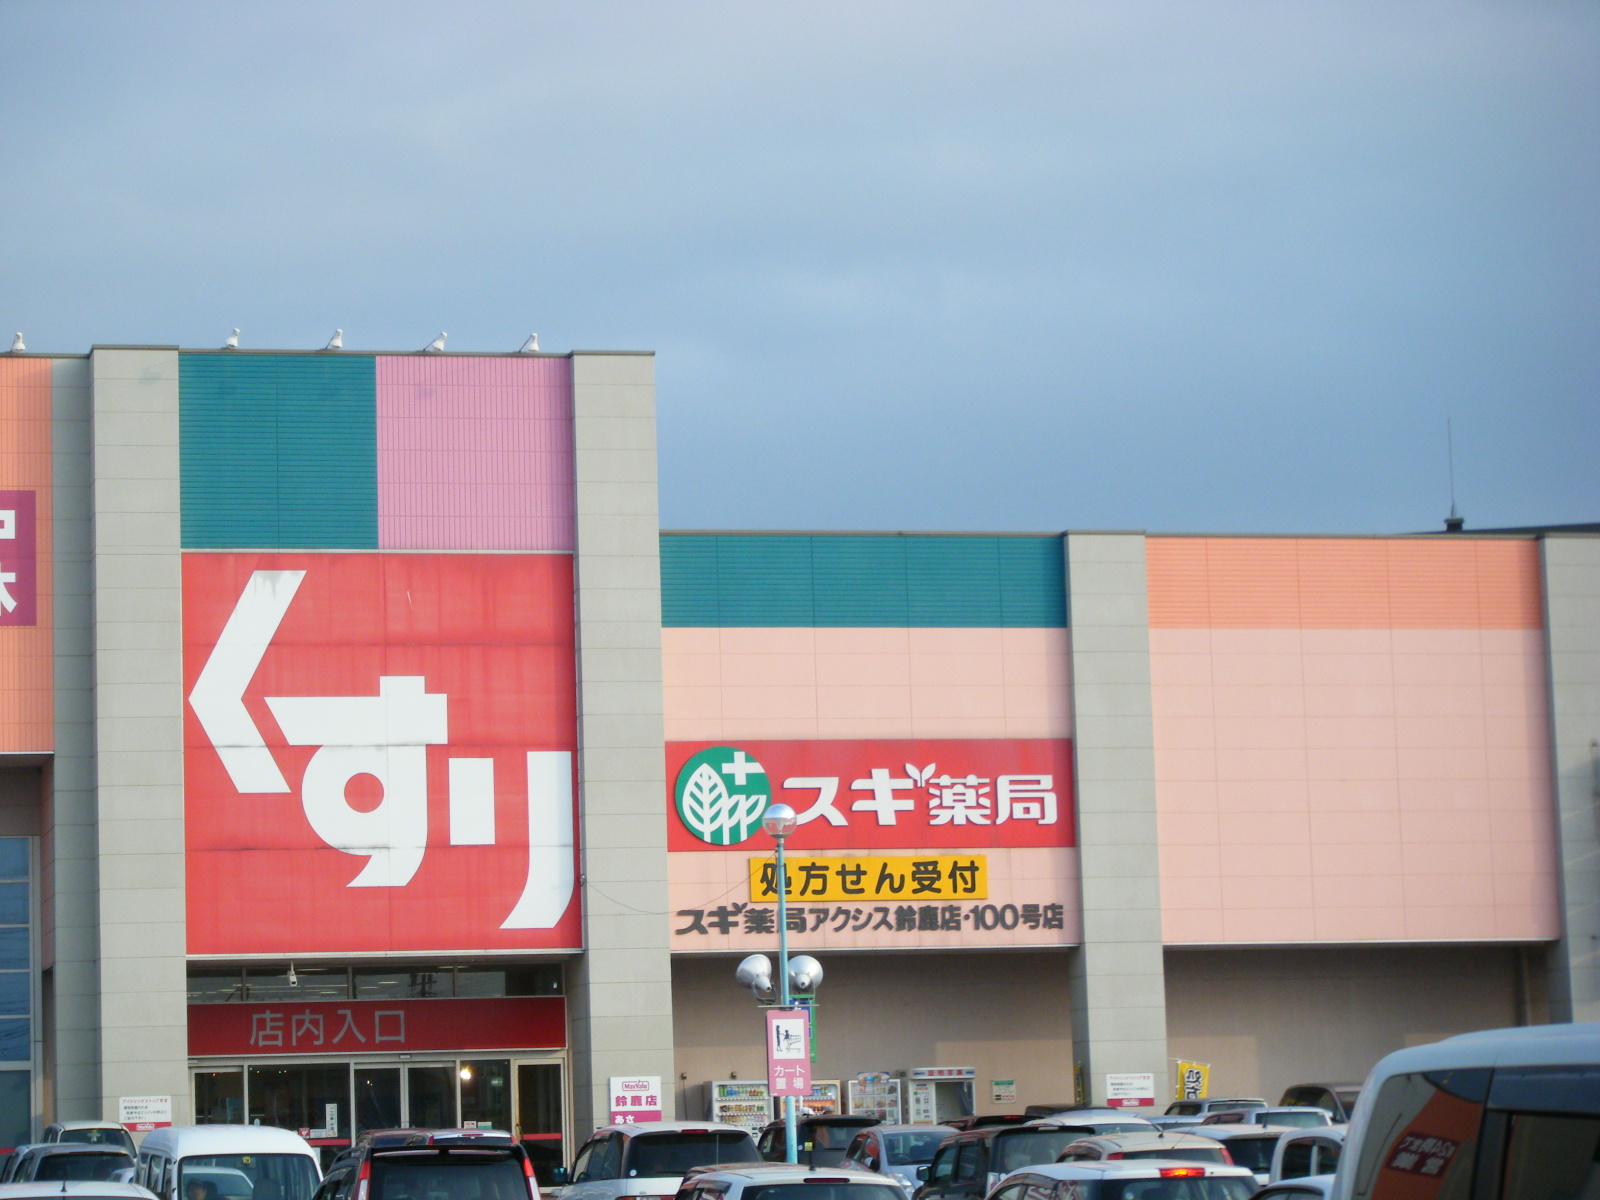 Dorakkusutoa. Cedar pharmacy axis Suzuka shop 333m until (drugstore)